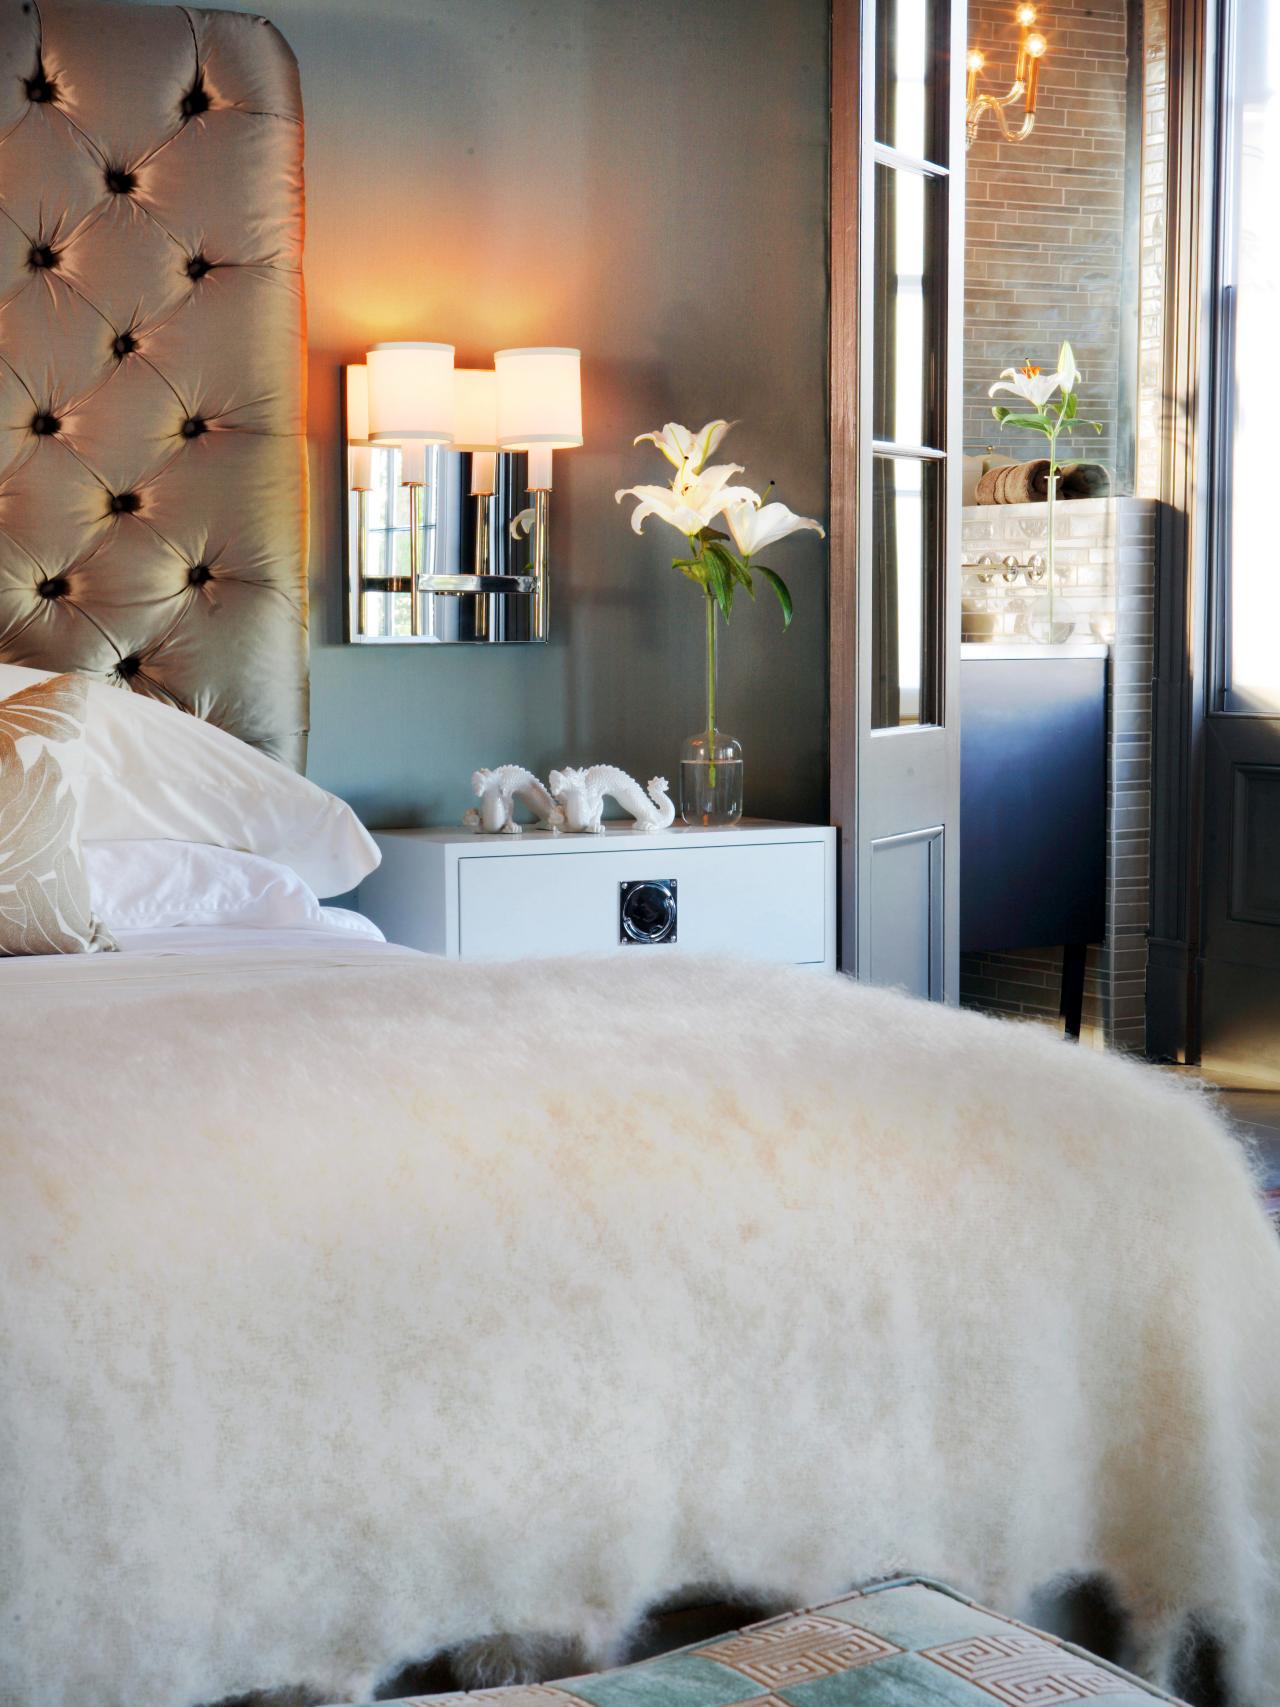 Bedroom Light Design: Illuminating Comfort And Style